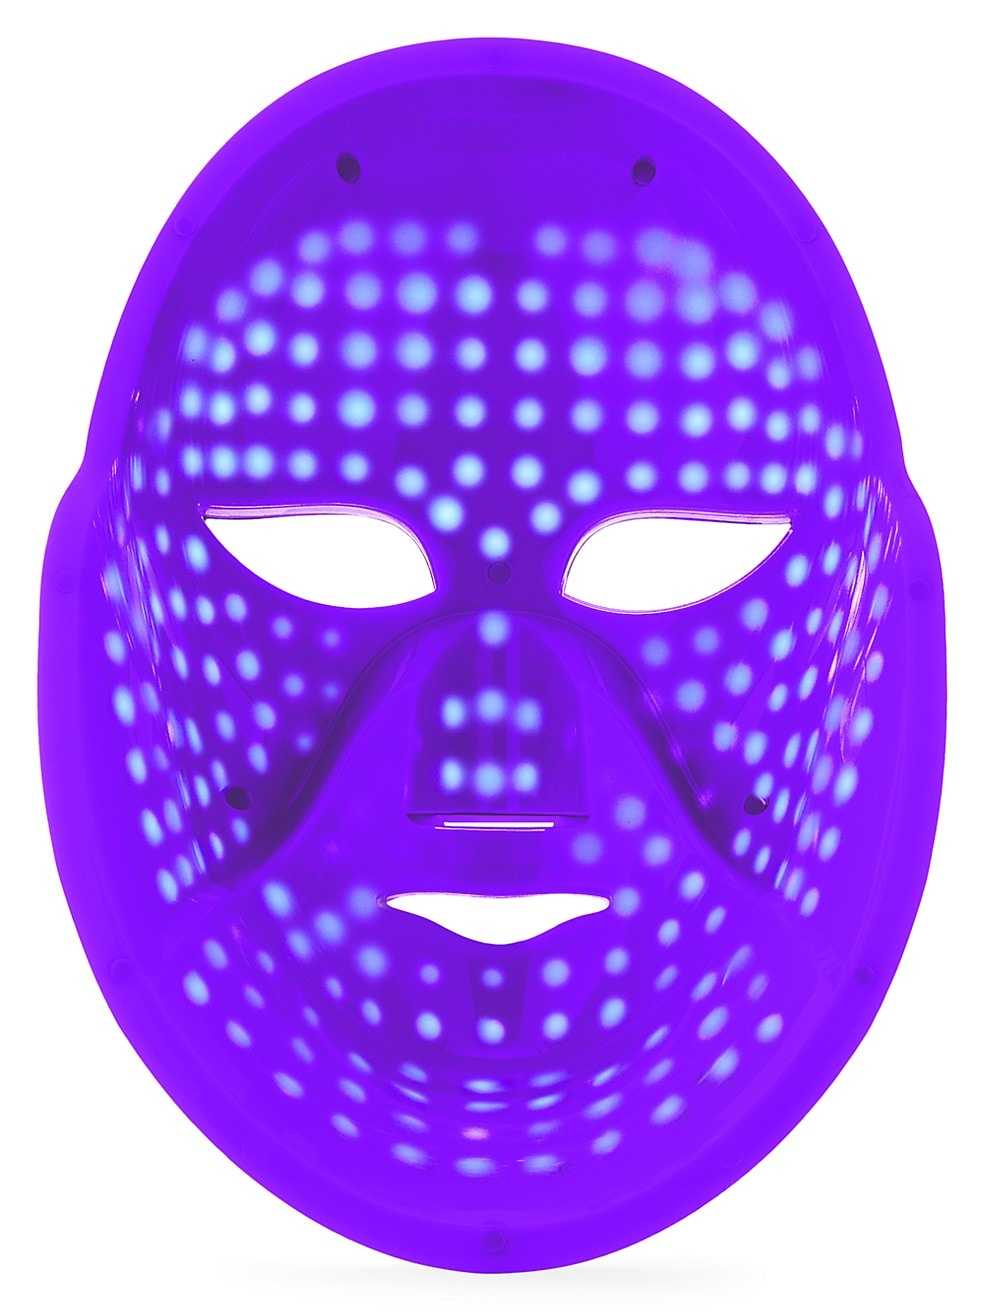 PARIOLI BEAUTY - Angela Caglia CellReturn Premium LED Wireless Mask